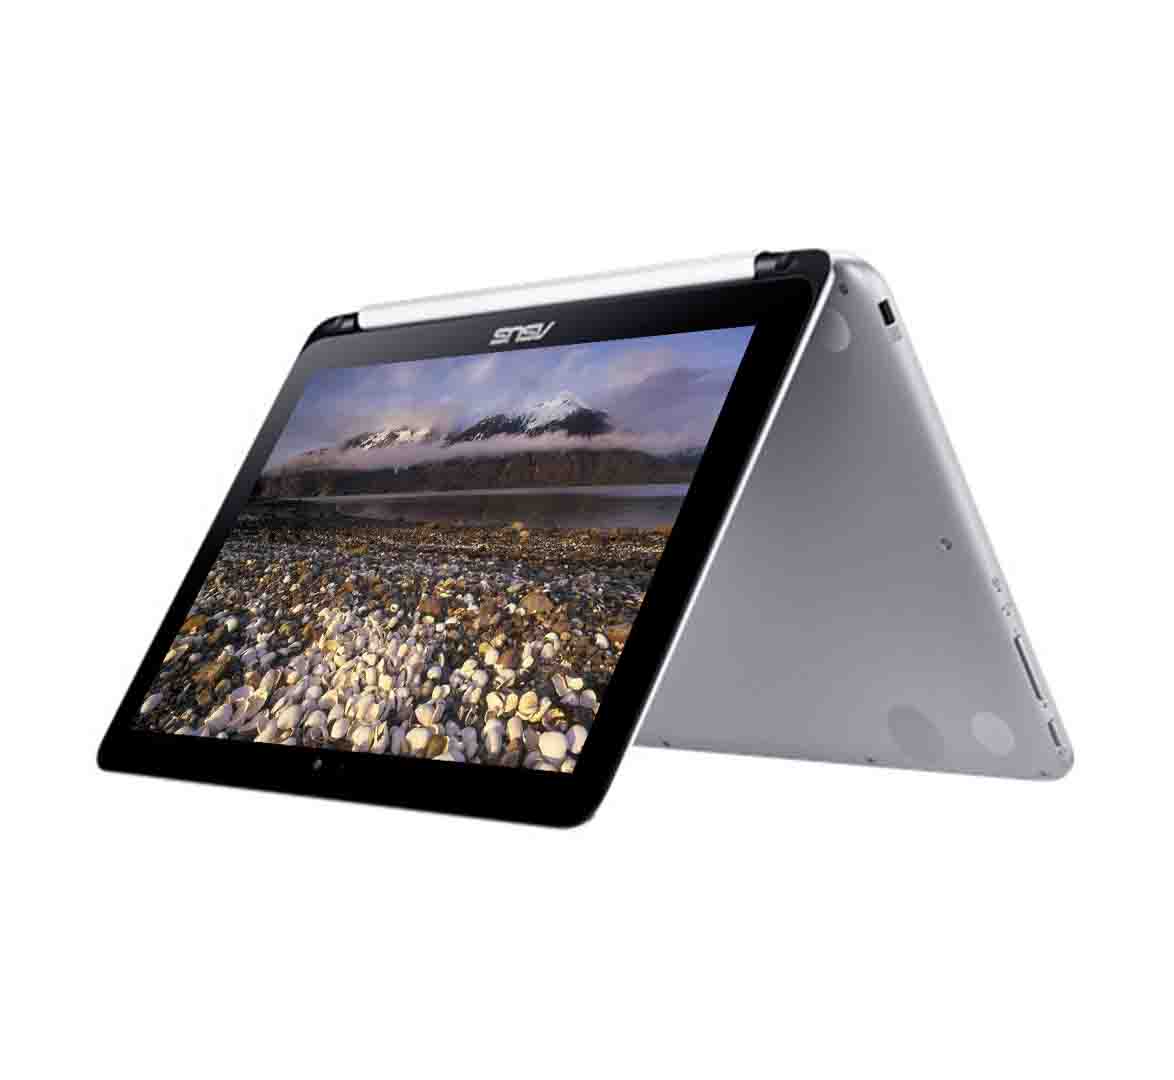 Asus Chromebook Flip C100PA Business Laptop, Intel ATOM CPU, 4GB RAM, 16GB HDD, 10.1 inch Touchscreen, Windows 10 Pro, Refurbished Laptop